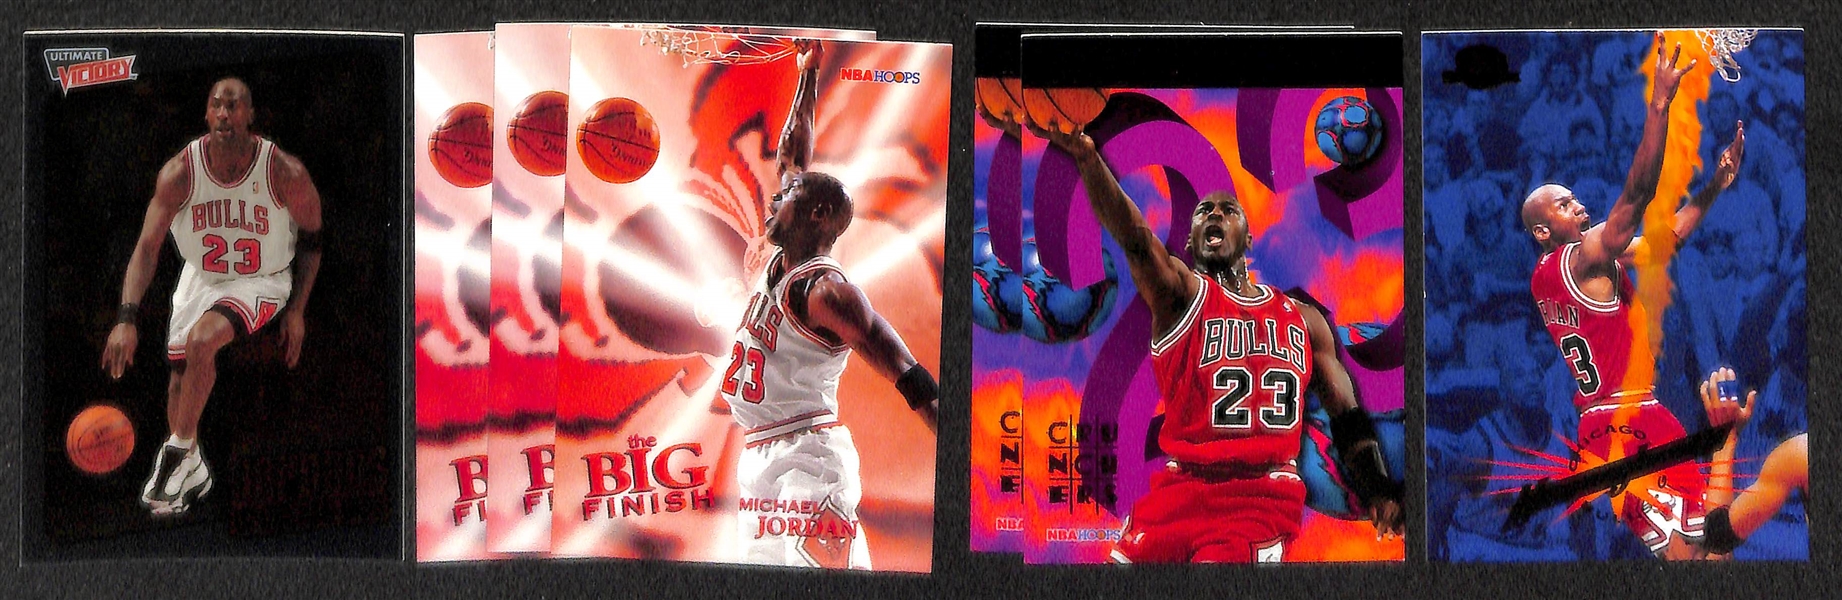 Large Michael Jordan Card Lot - 180+ Cards